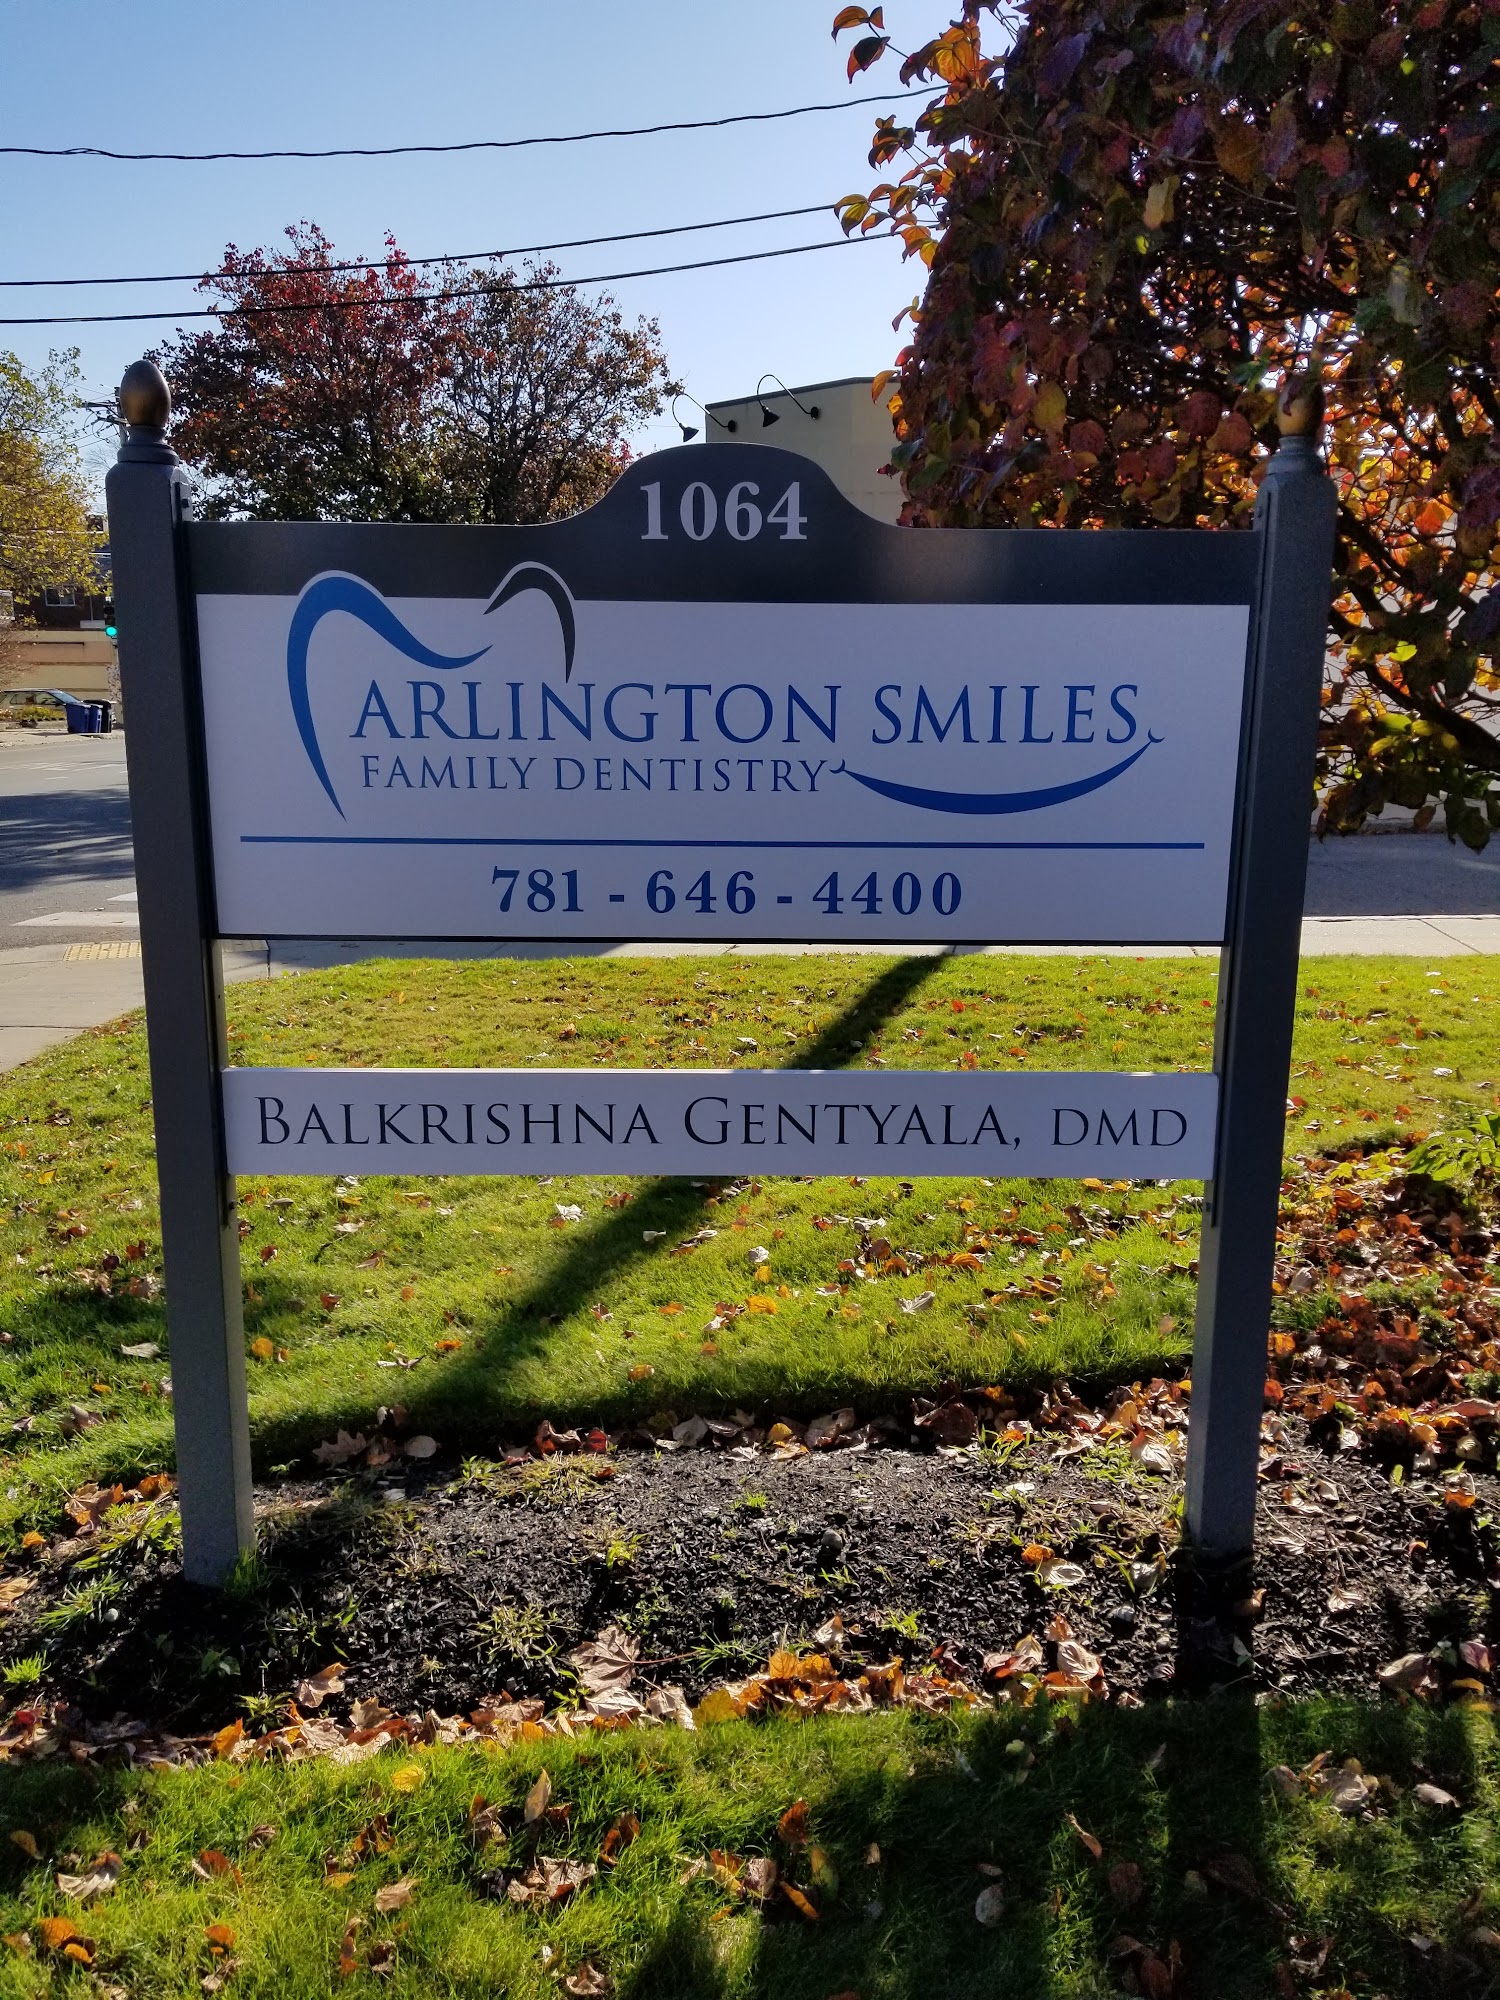 Arlington Smiles - Family Dentistry